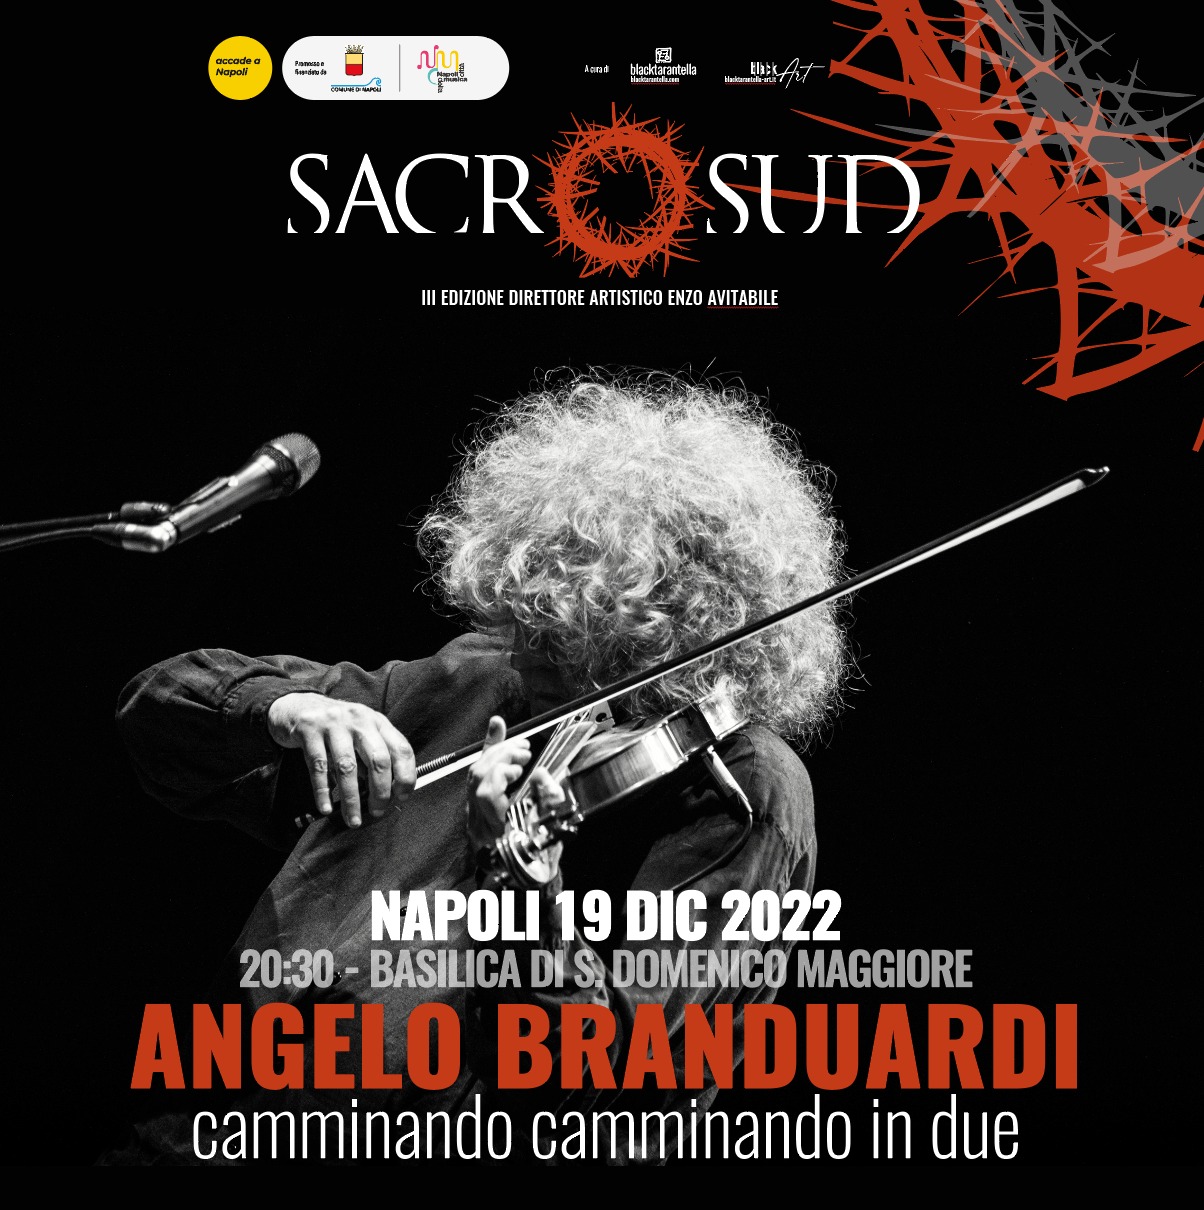 Branduardi inaugura “Sacro Sud”, festival diretto da Enzo Avitabile